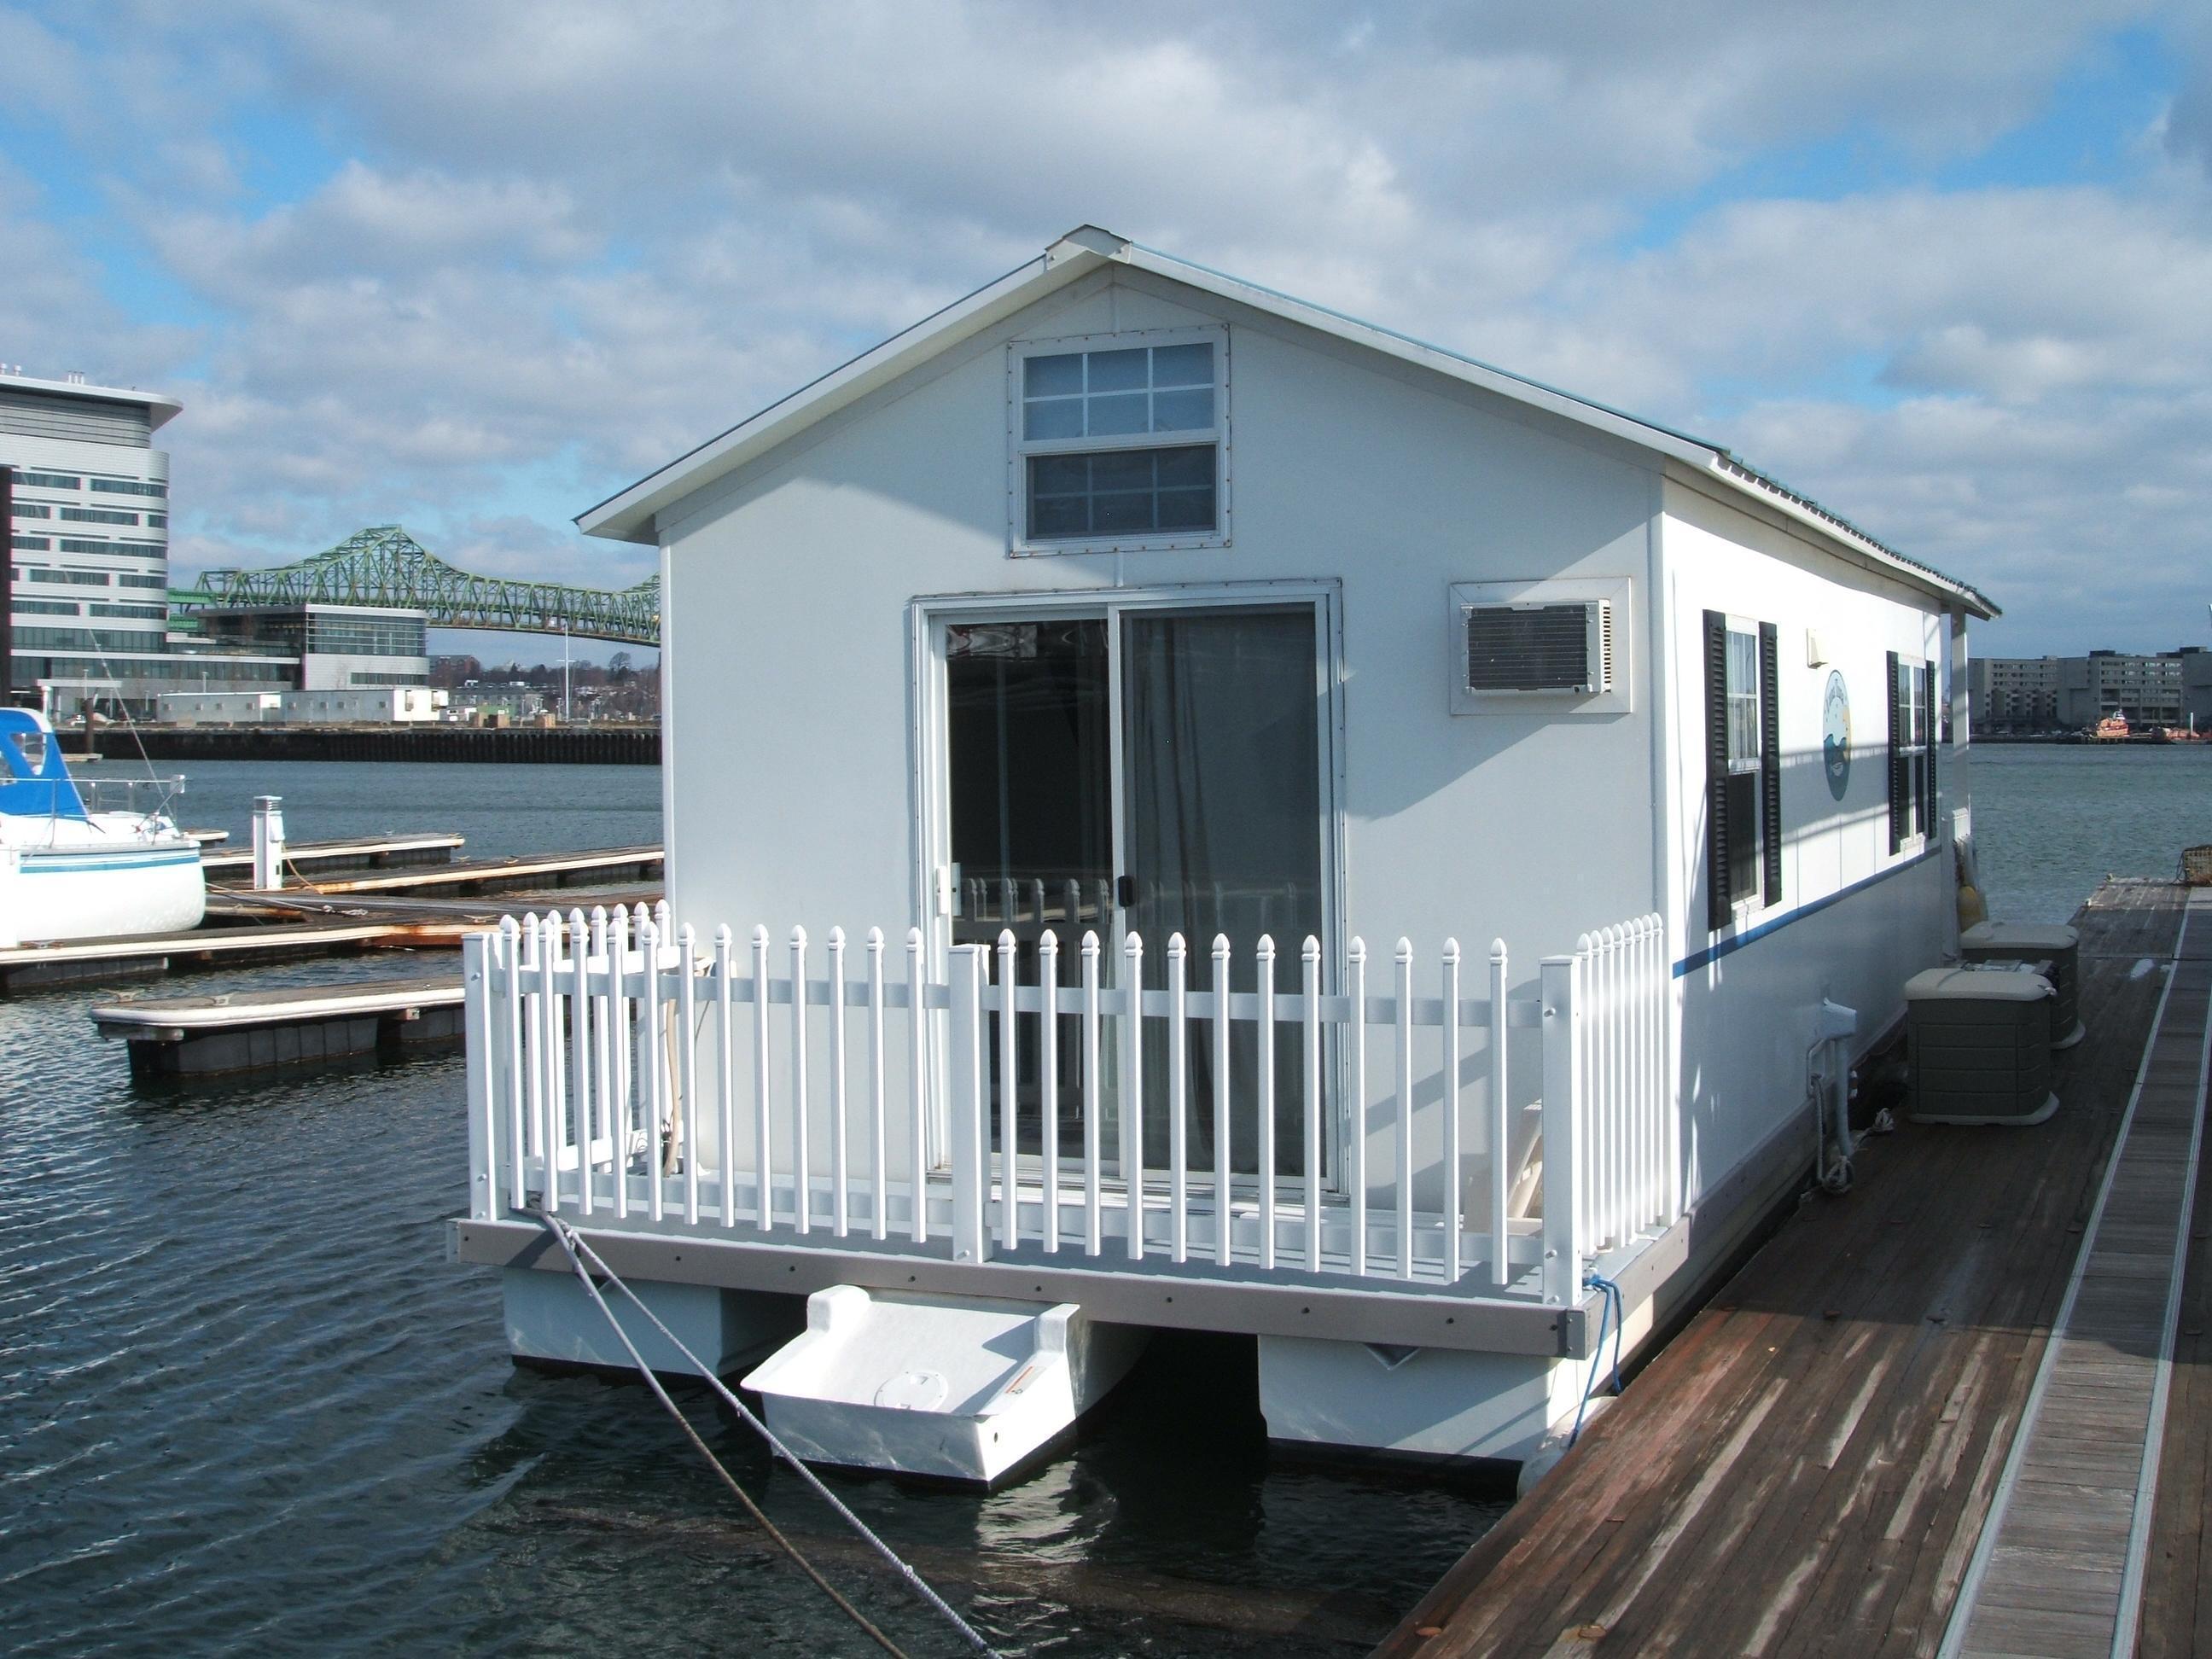 Cataran Cruisers Aqua Lodge Houseboat, East Boston